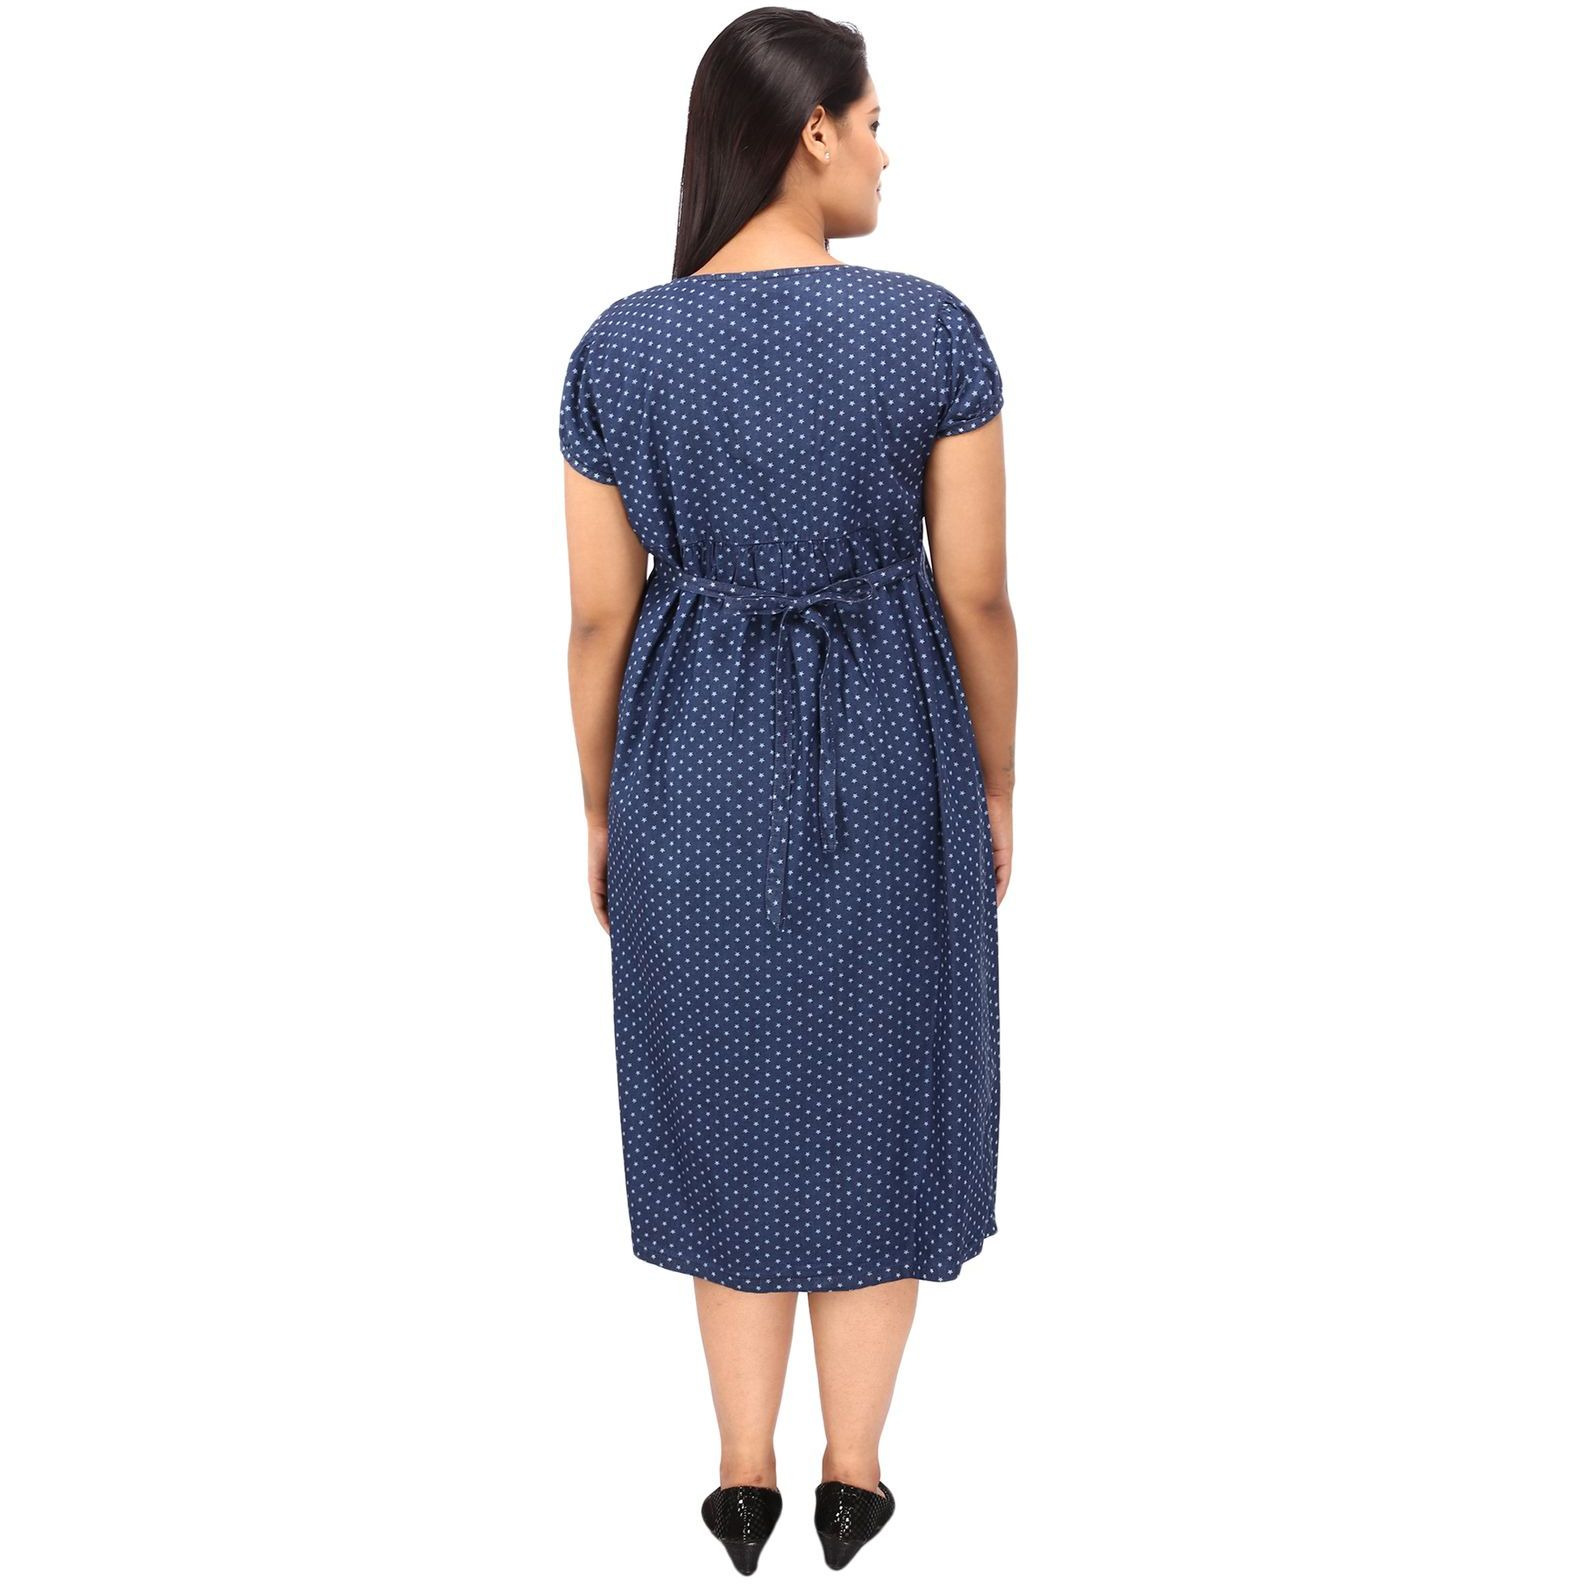 Mamma's Maternity Women's Star Printed Blue Denim Maternity Dress